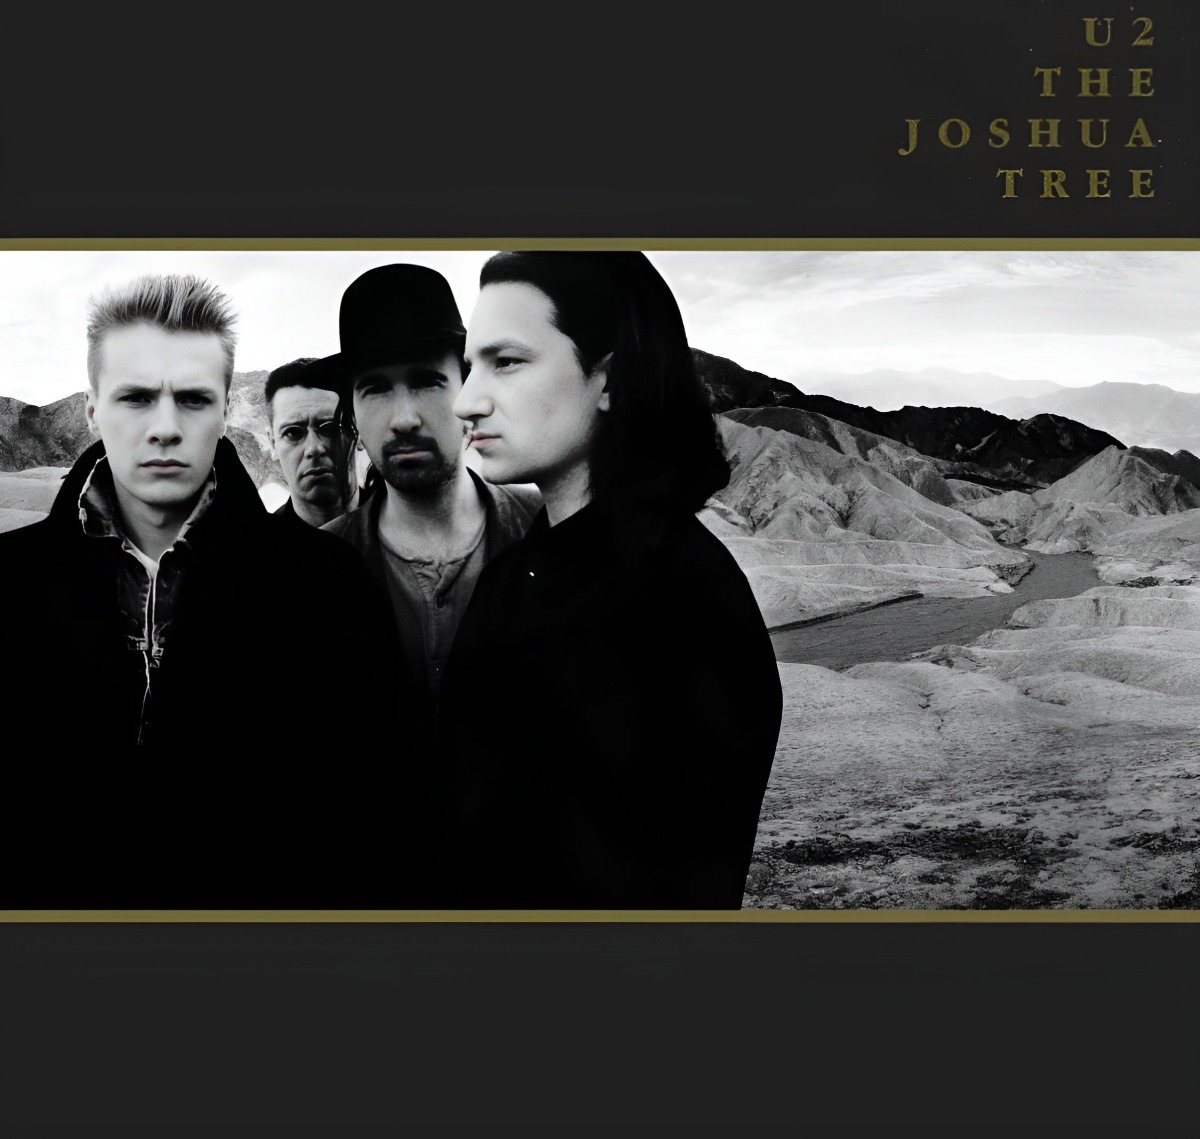 Capa do álbum "The Joshua Tree" do U2